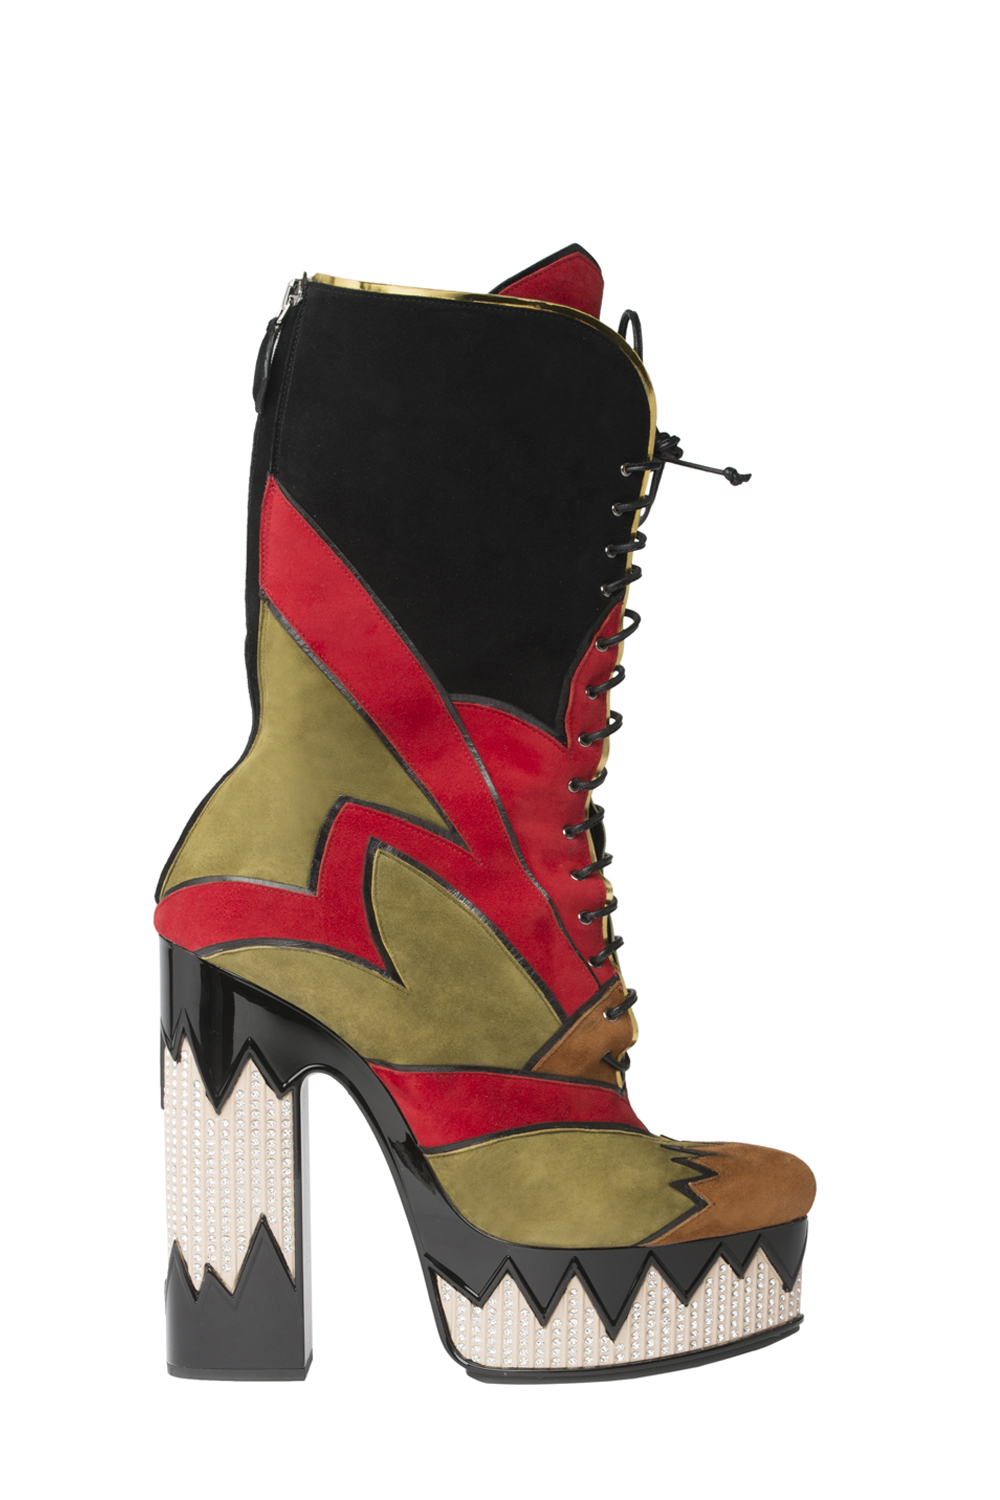 Boots, $5,200, by Miu Miu.